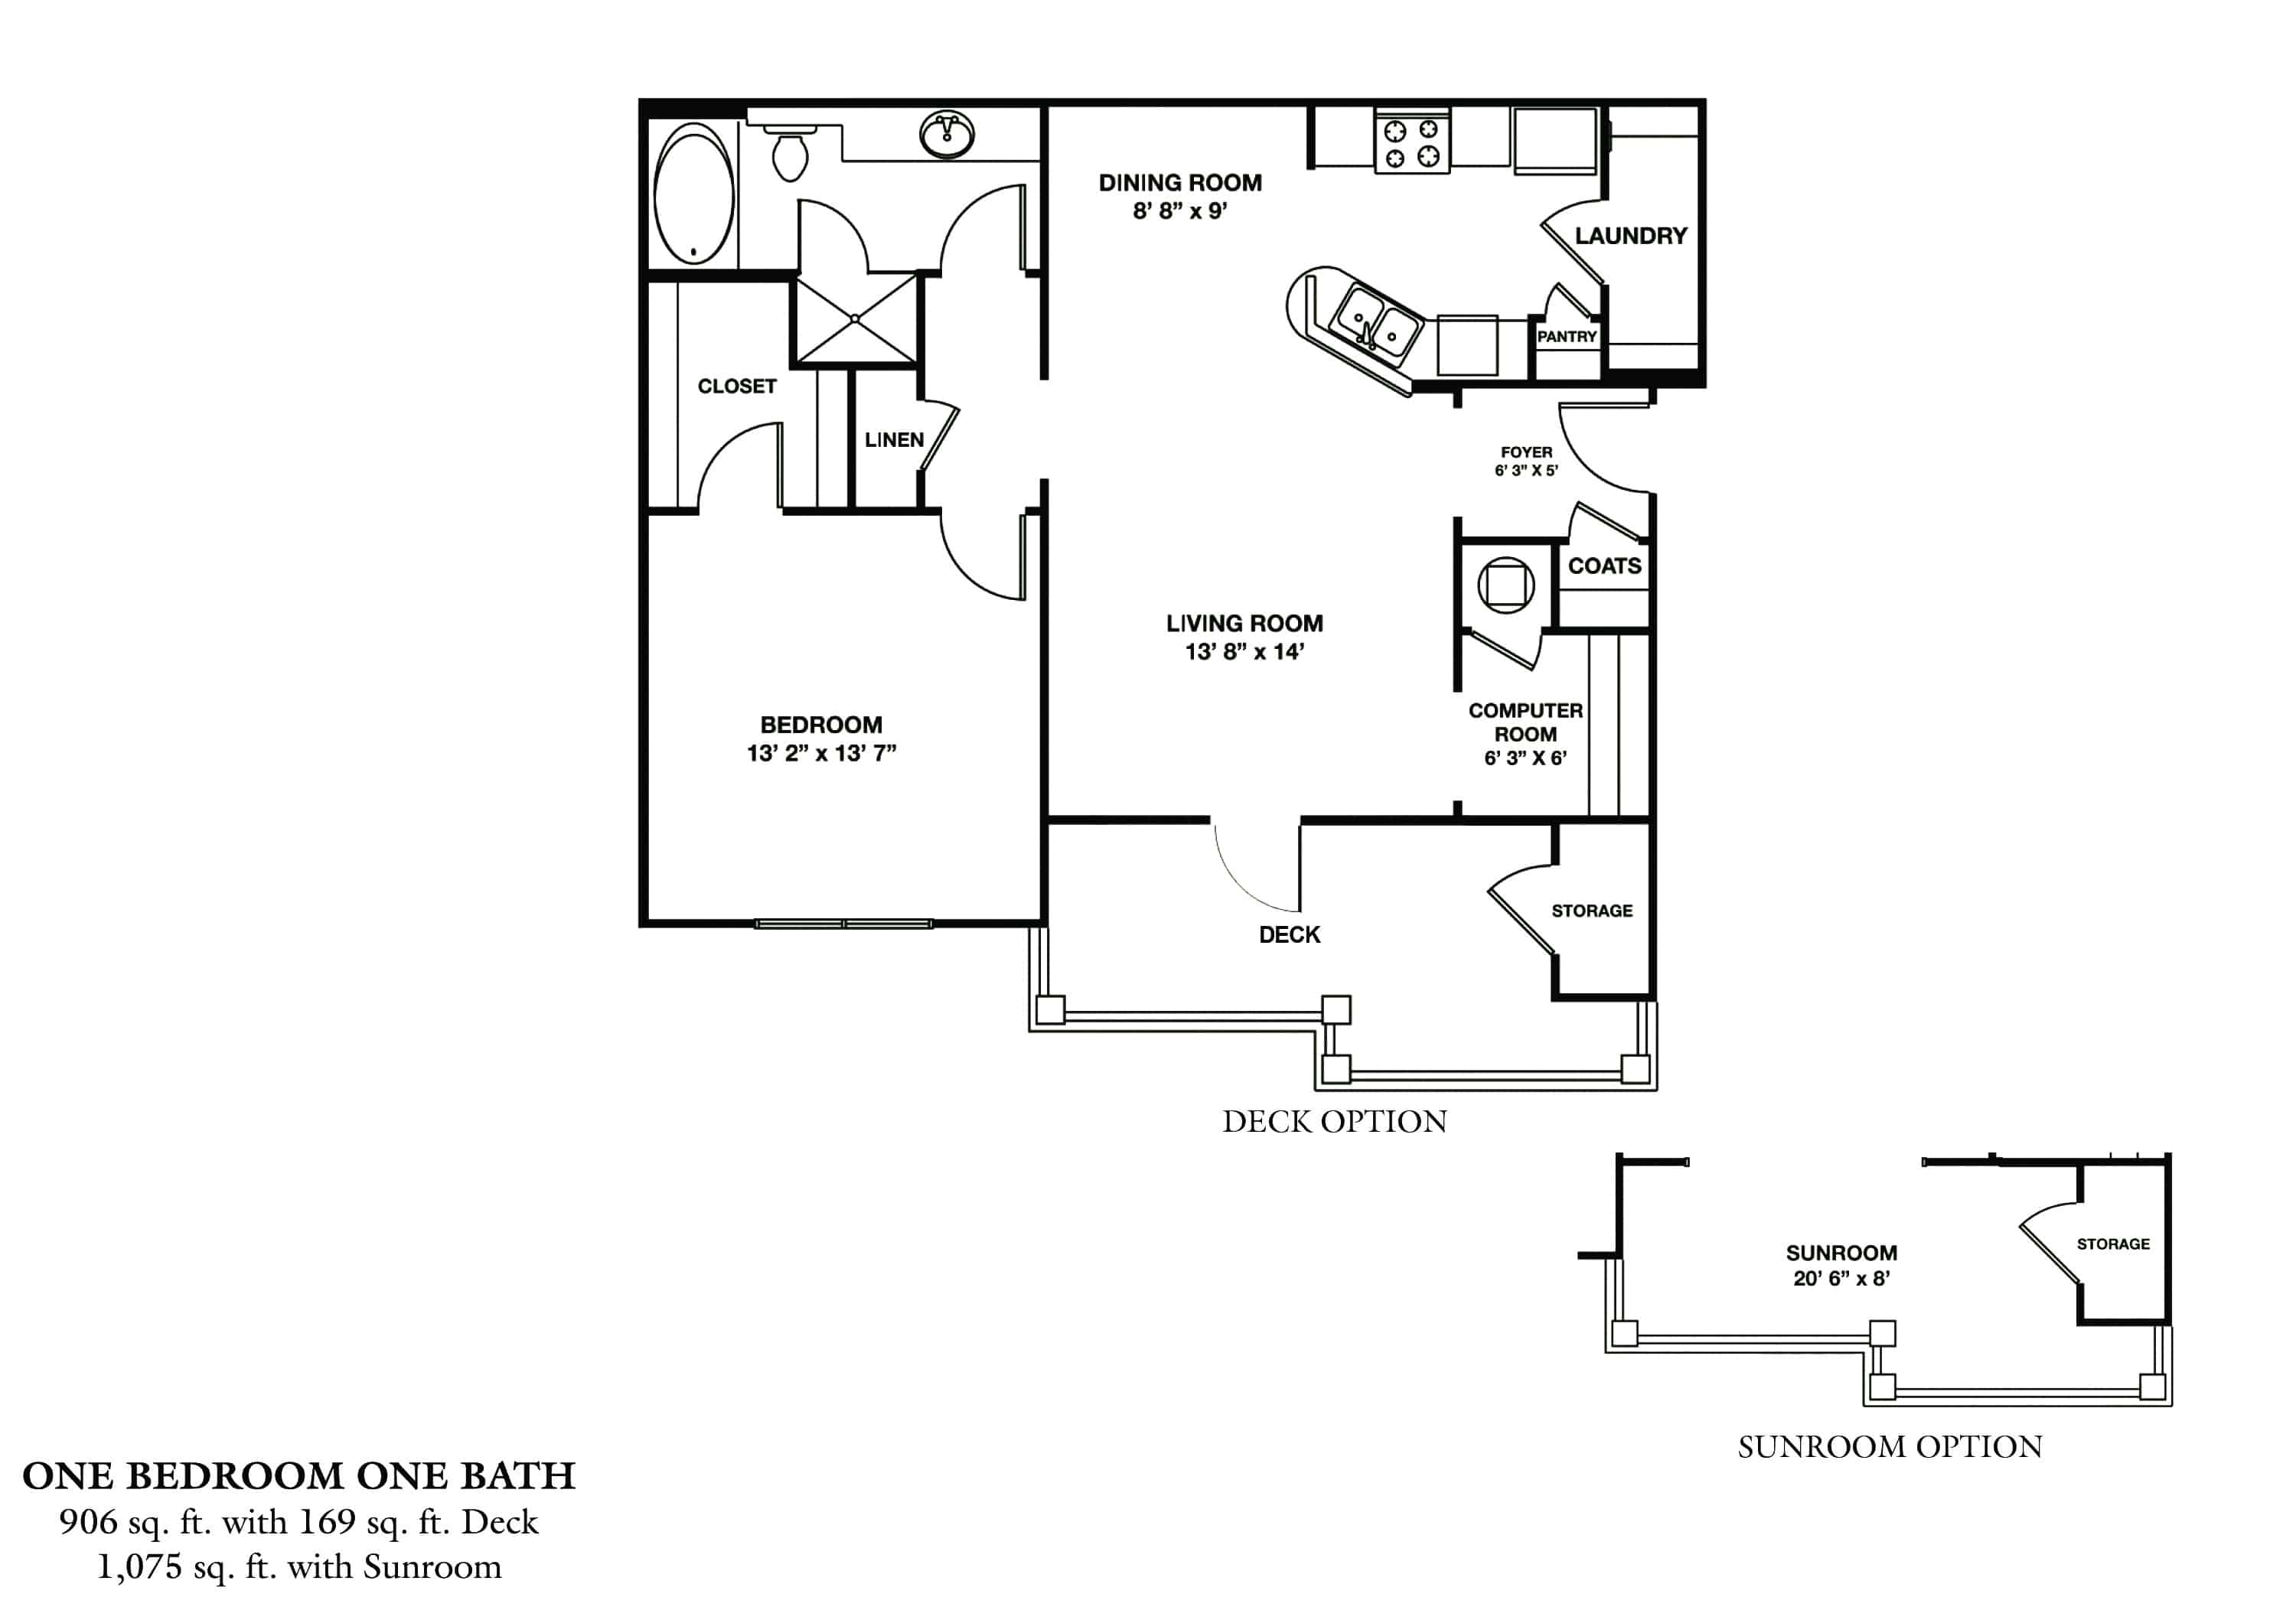 Greystone Properties Columbus, GA apartments summit olympus one bedroom floor plan